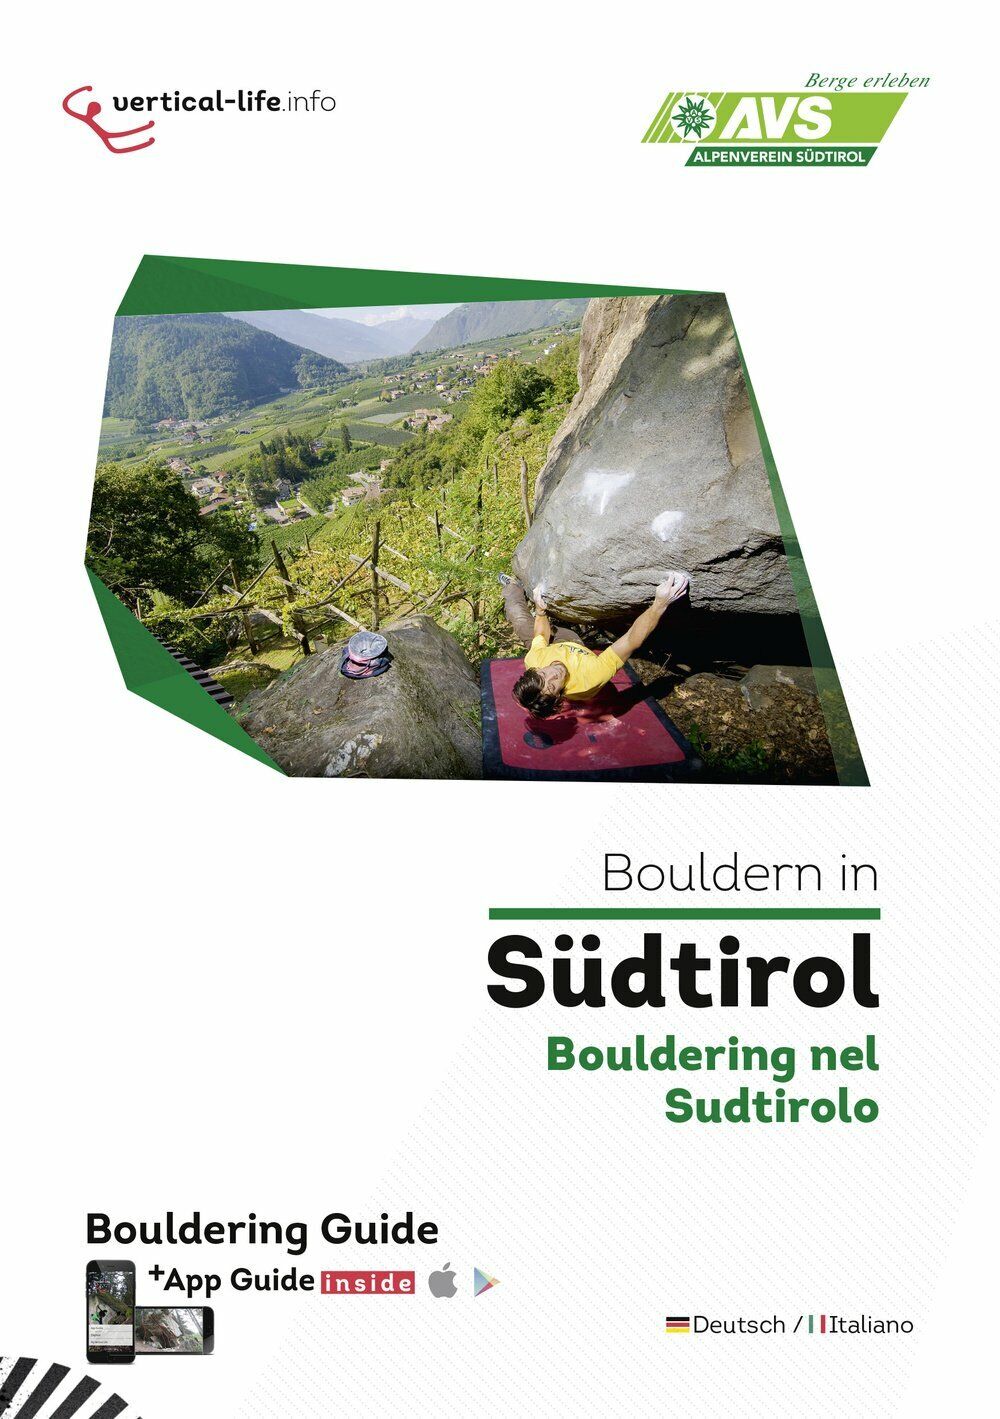 Bouldern in S?dtirol - Thomas Hofer  - Vertical Life, 2015